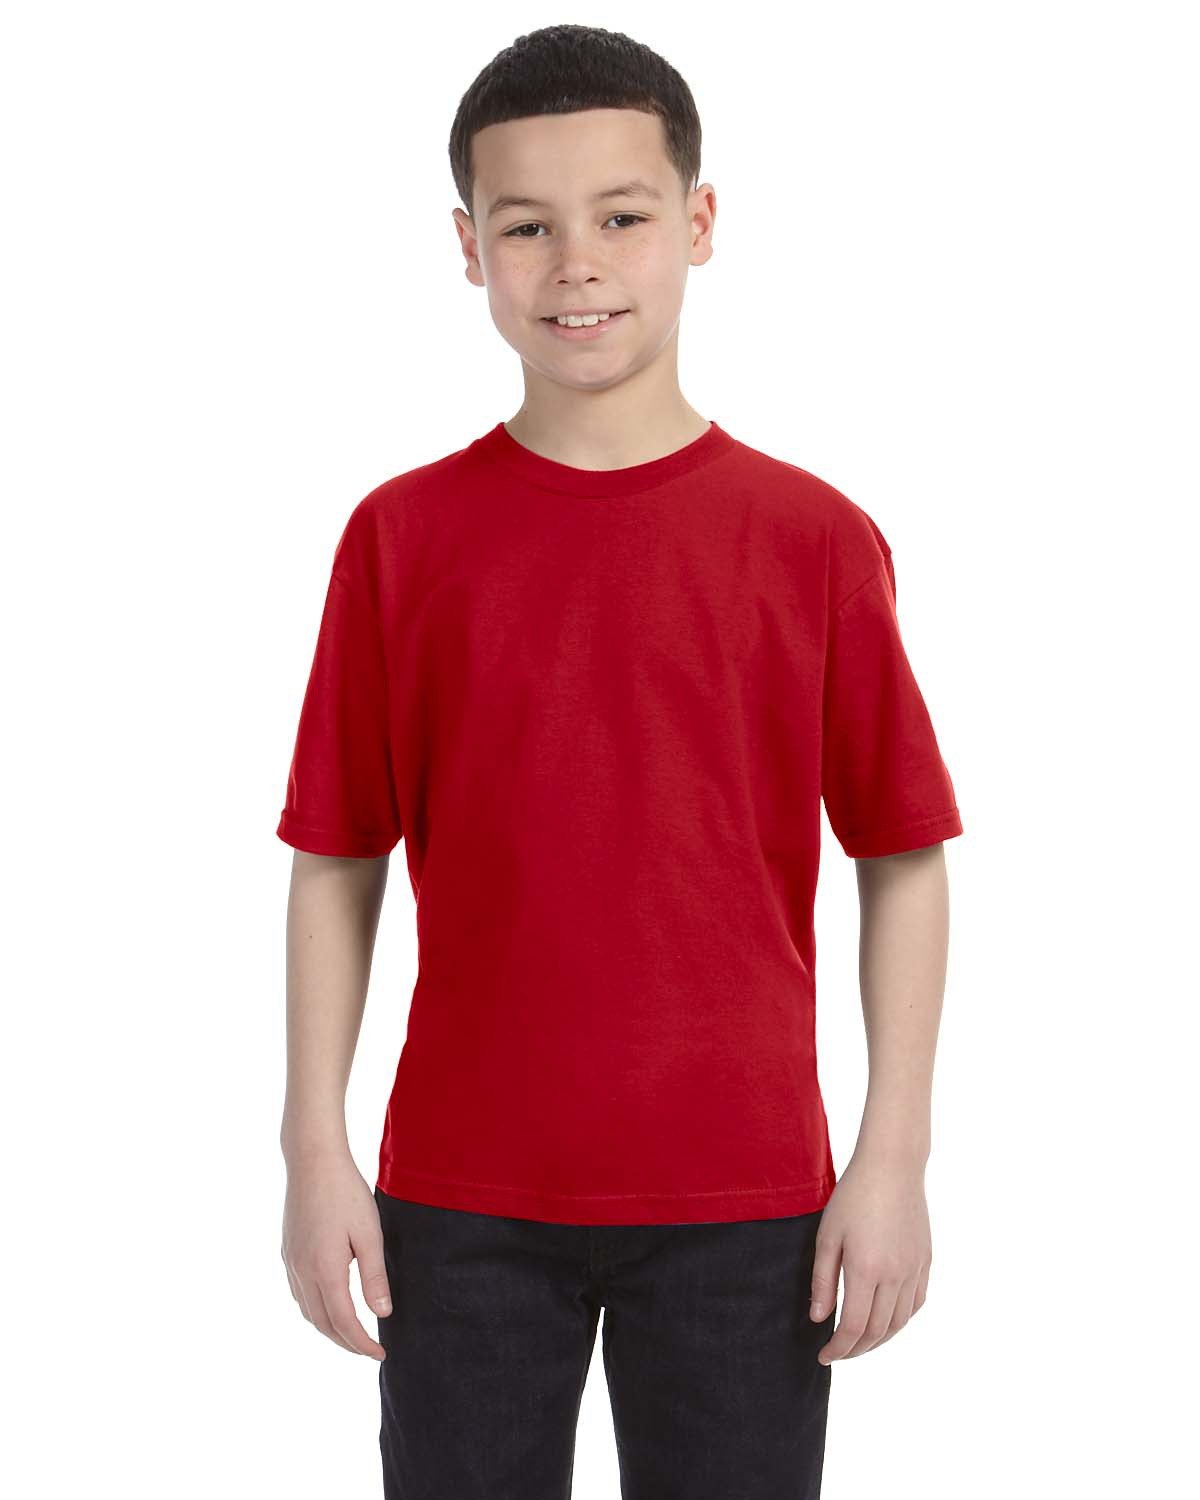 Anvil Boys Lightweight Short Sleeve Cotton T-shirt 990B